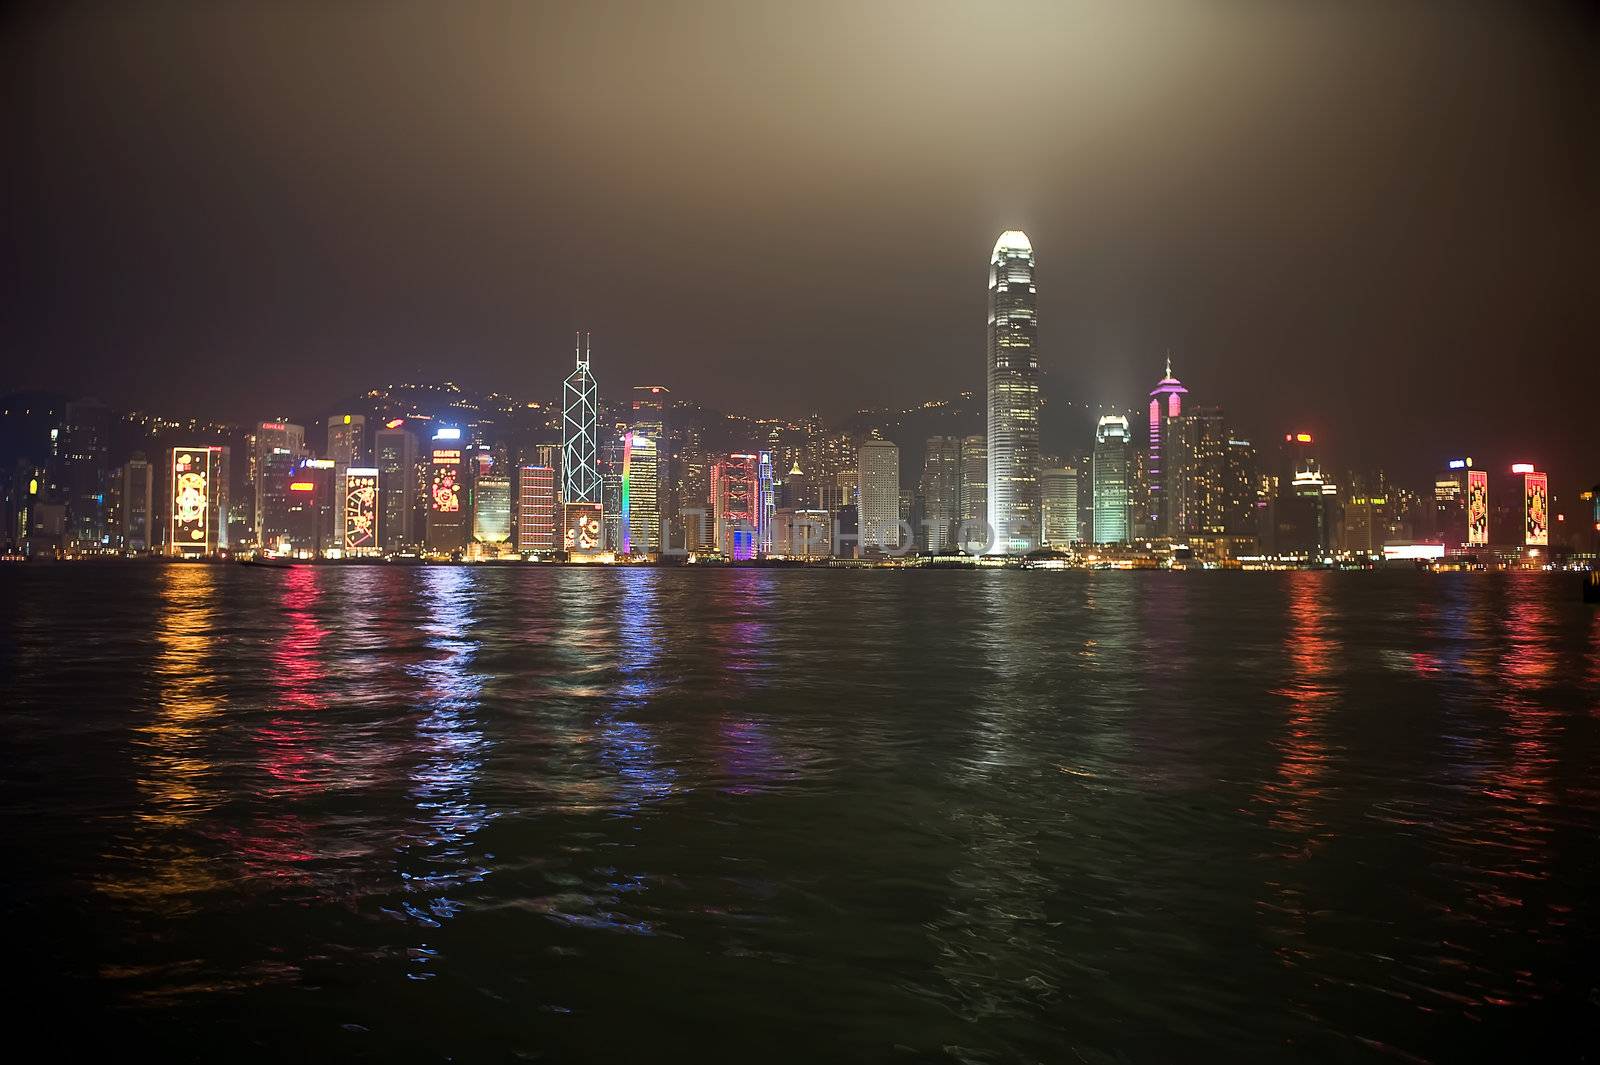 Hong Kong night view by Marcus